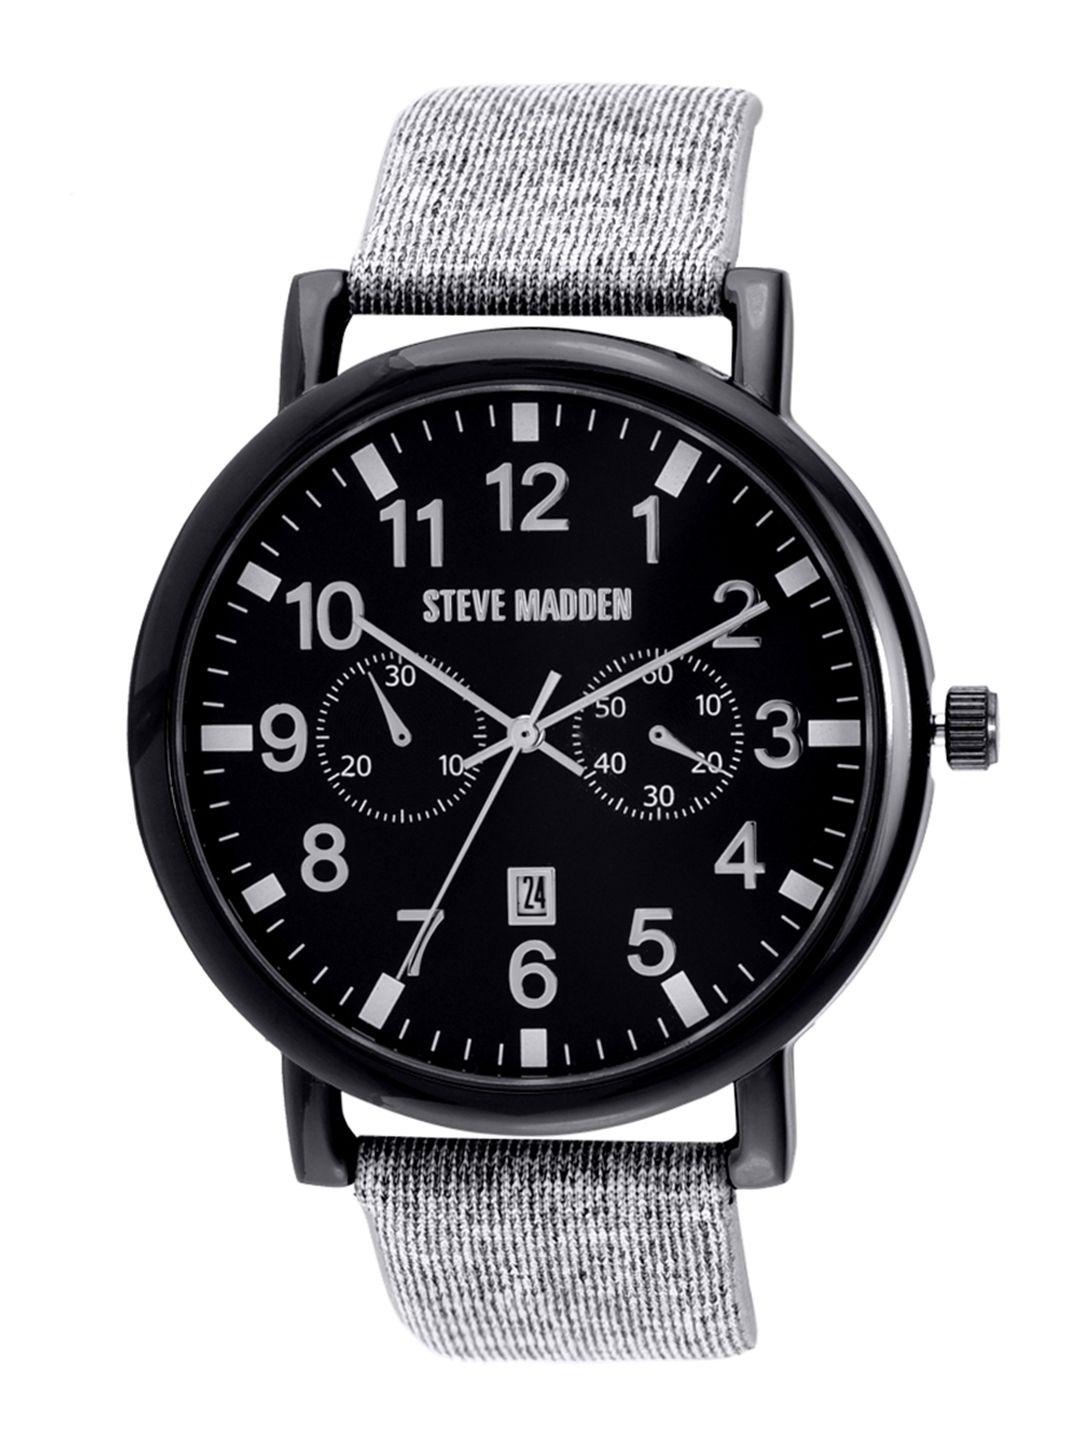 steve madden men black leather analogue watch smw256bk